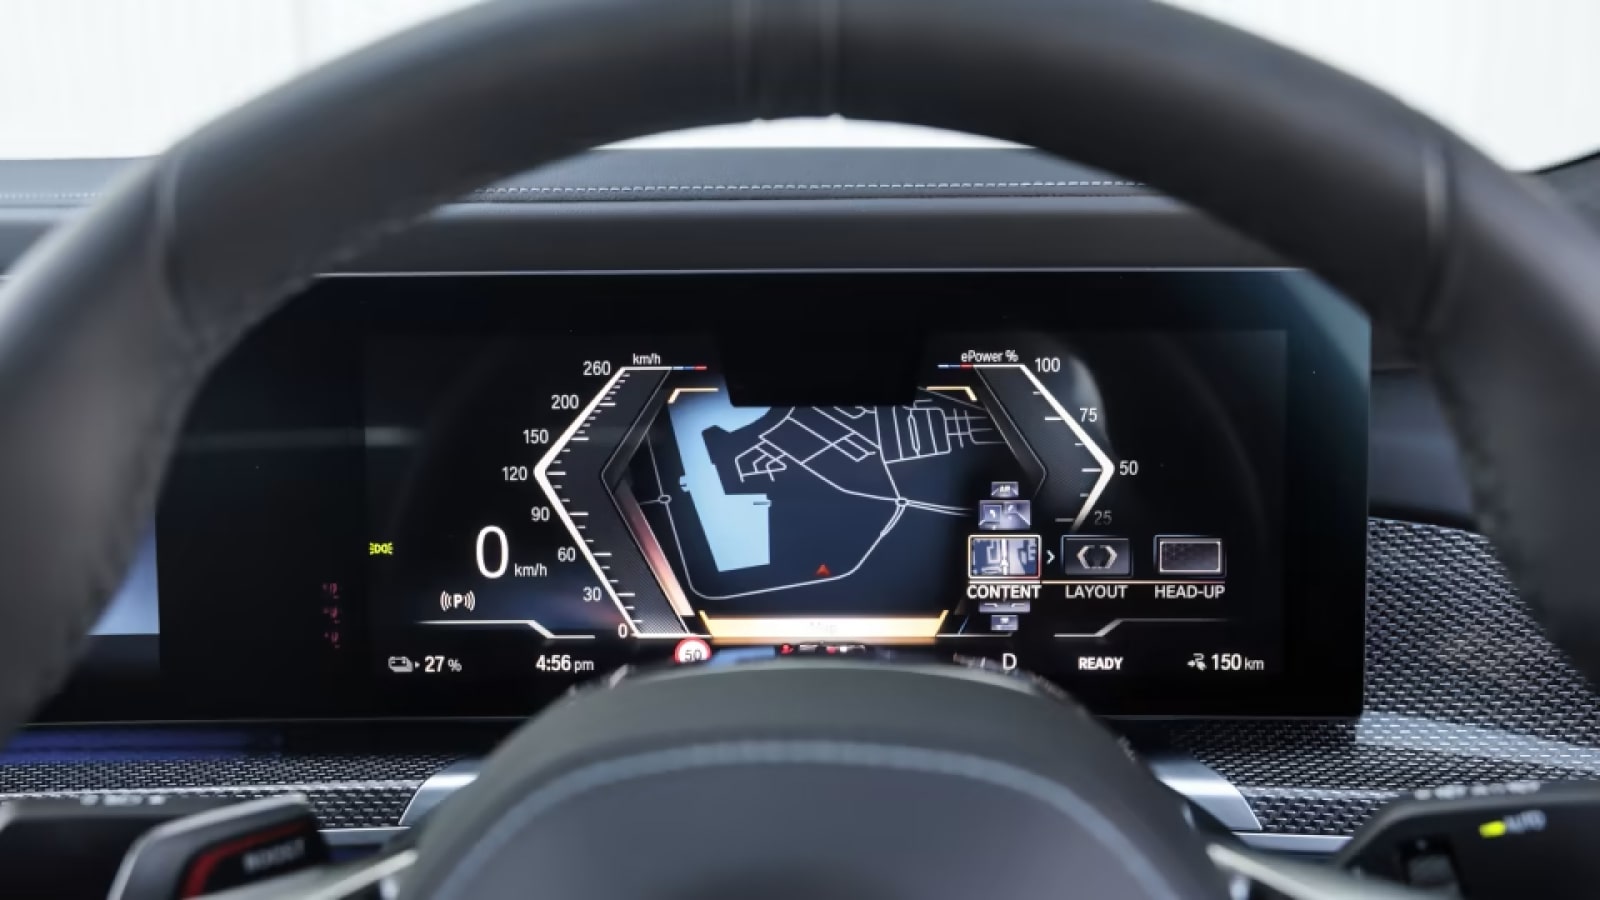 BMW i7 driver interface - content navigation mode